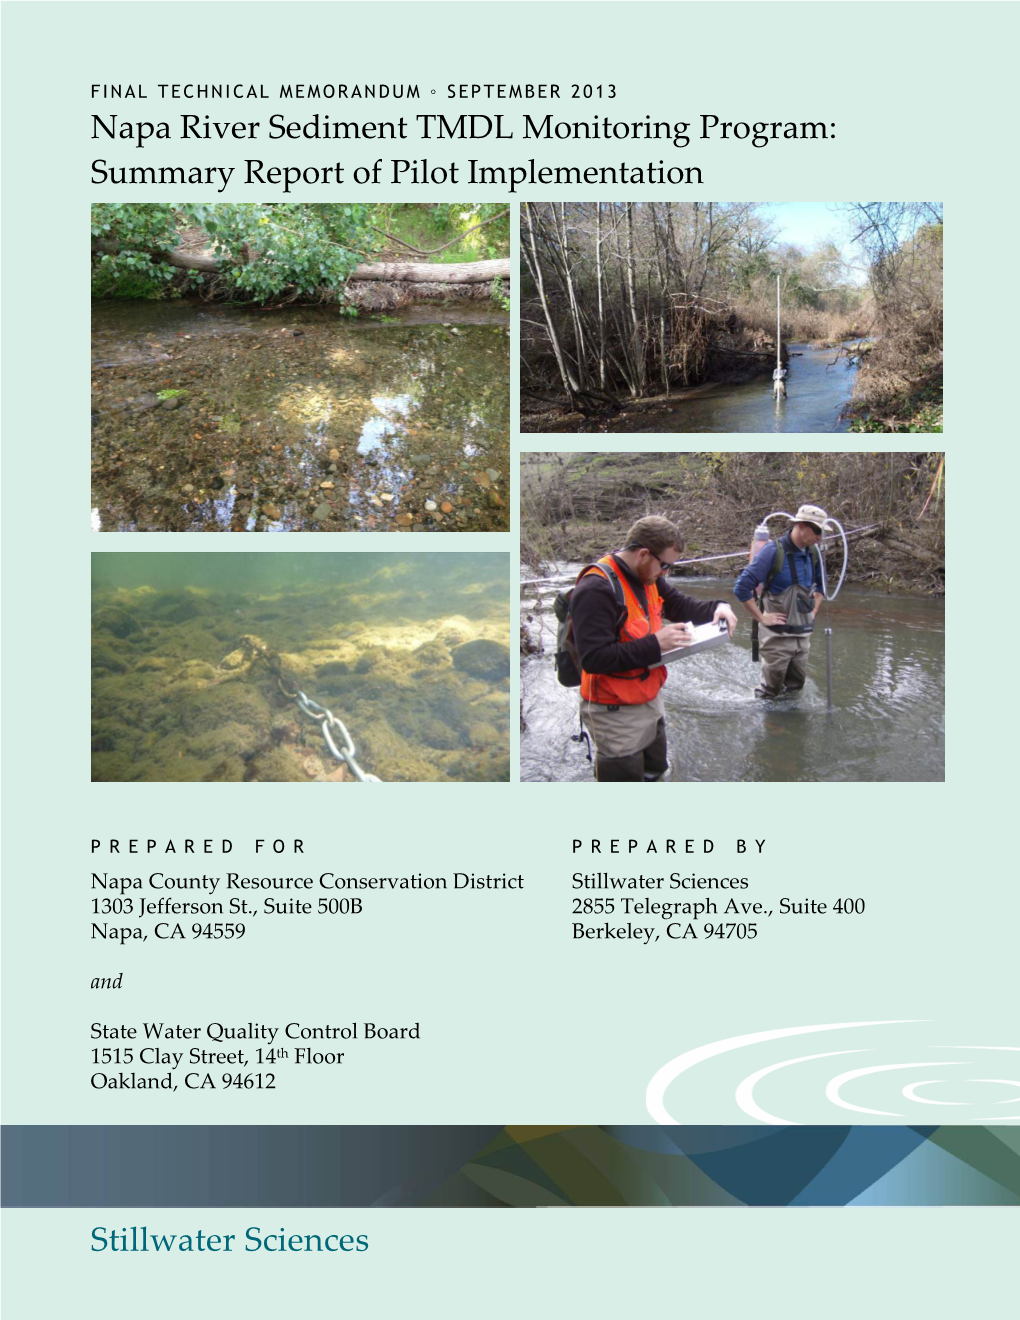 Stillwater Sciences Napa River Sediment TMDL Monitoring Program